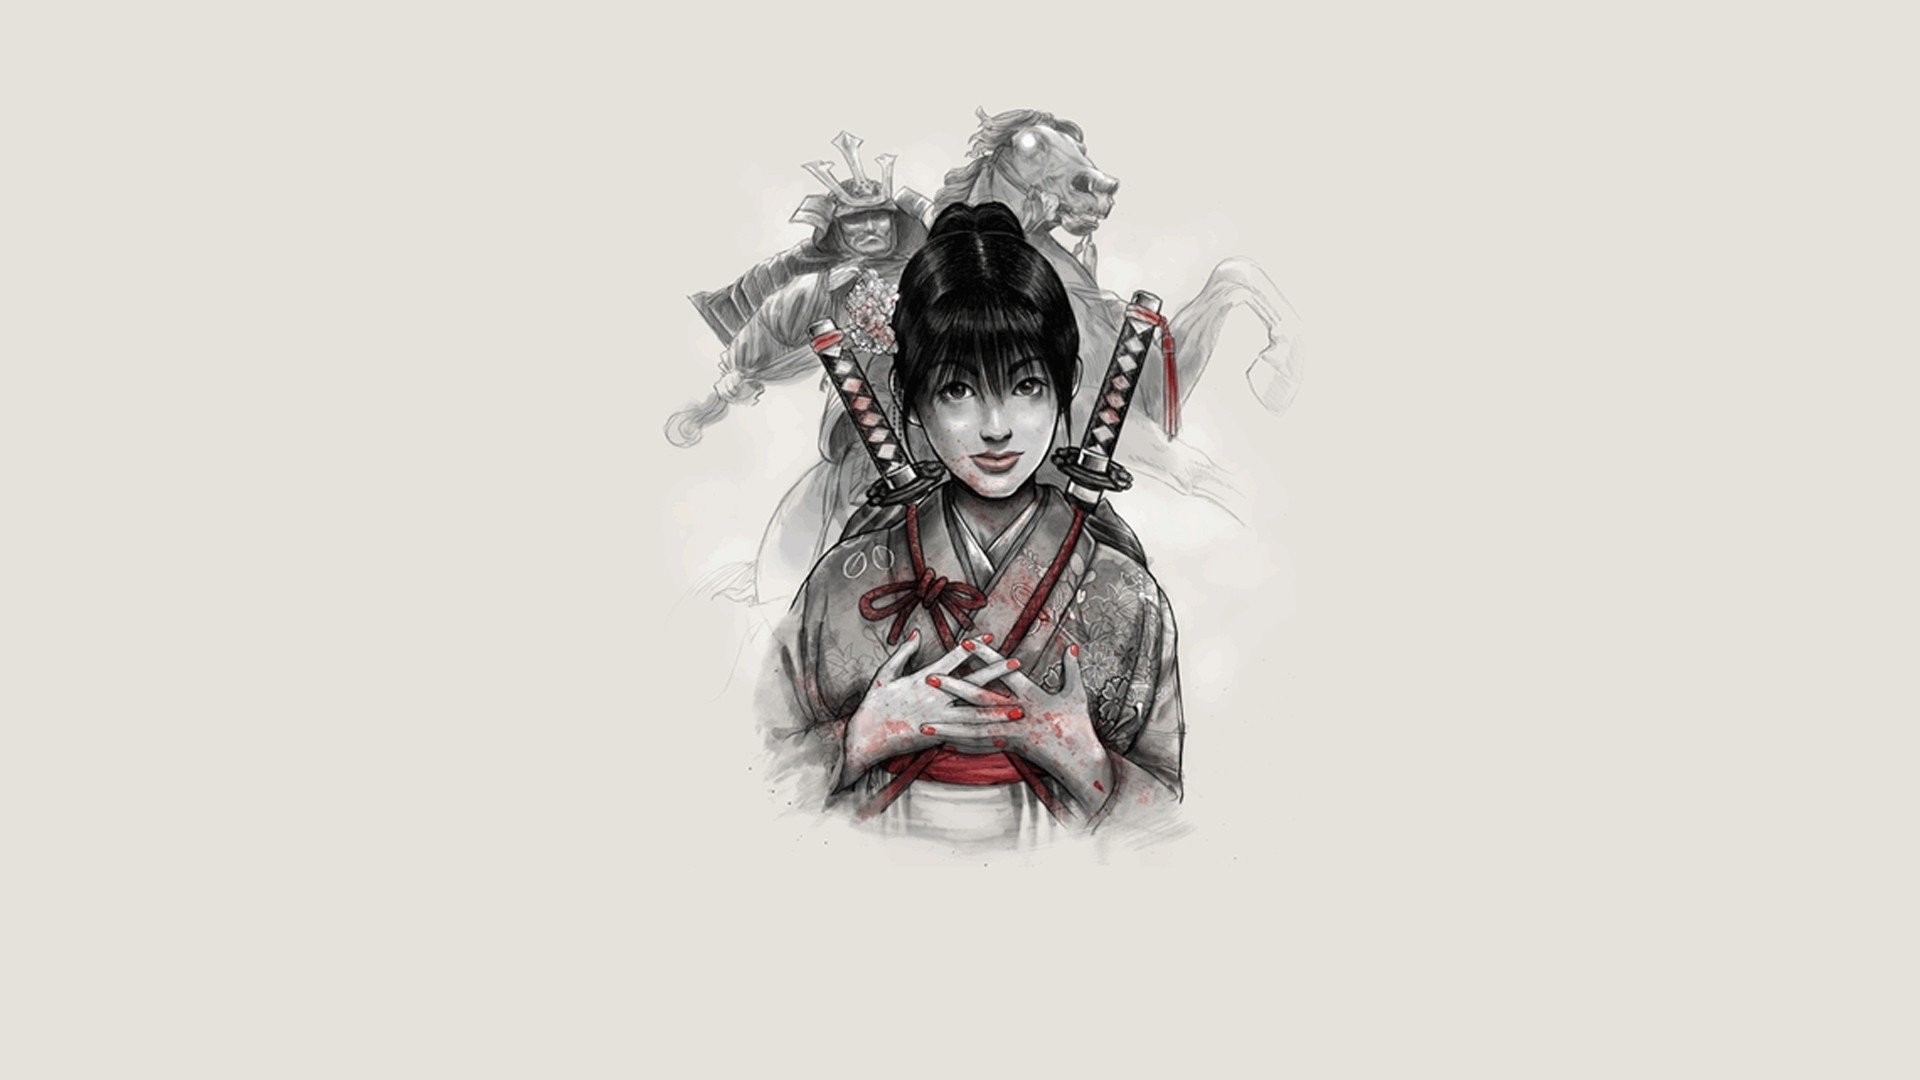 1920x1080 Fantasy - Samurai Wallpaper